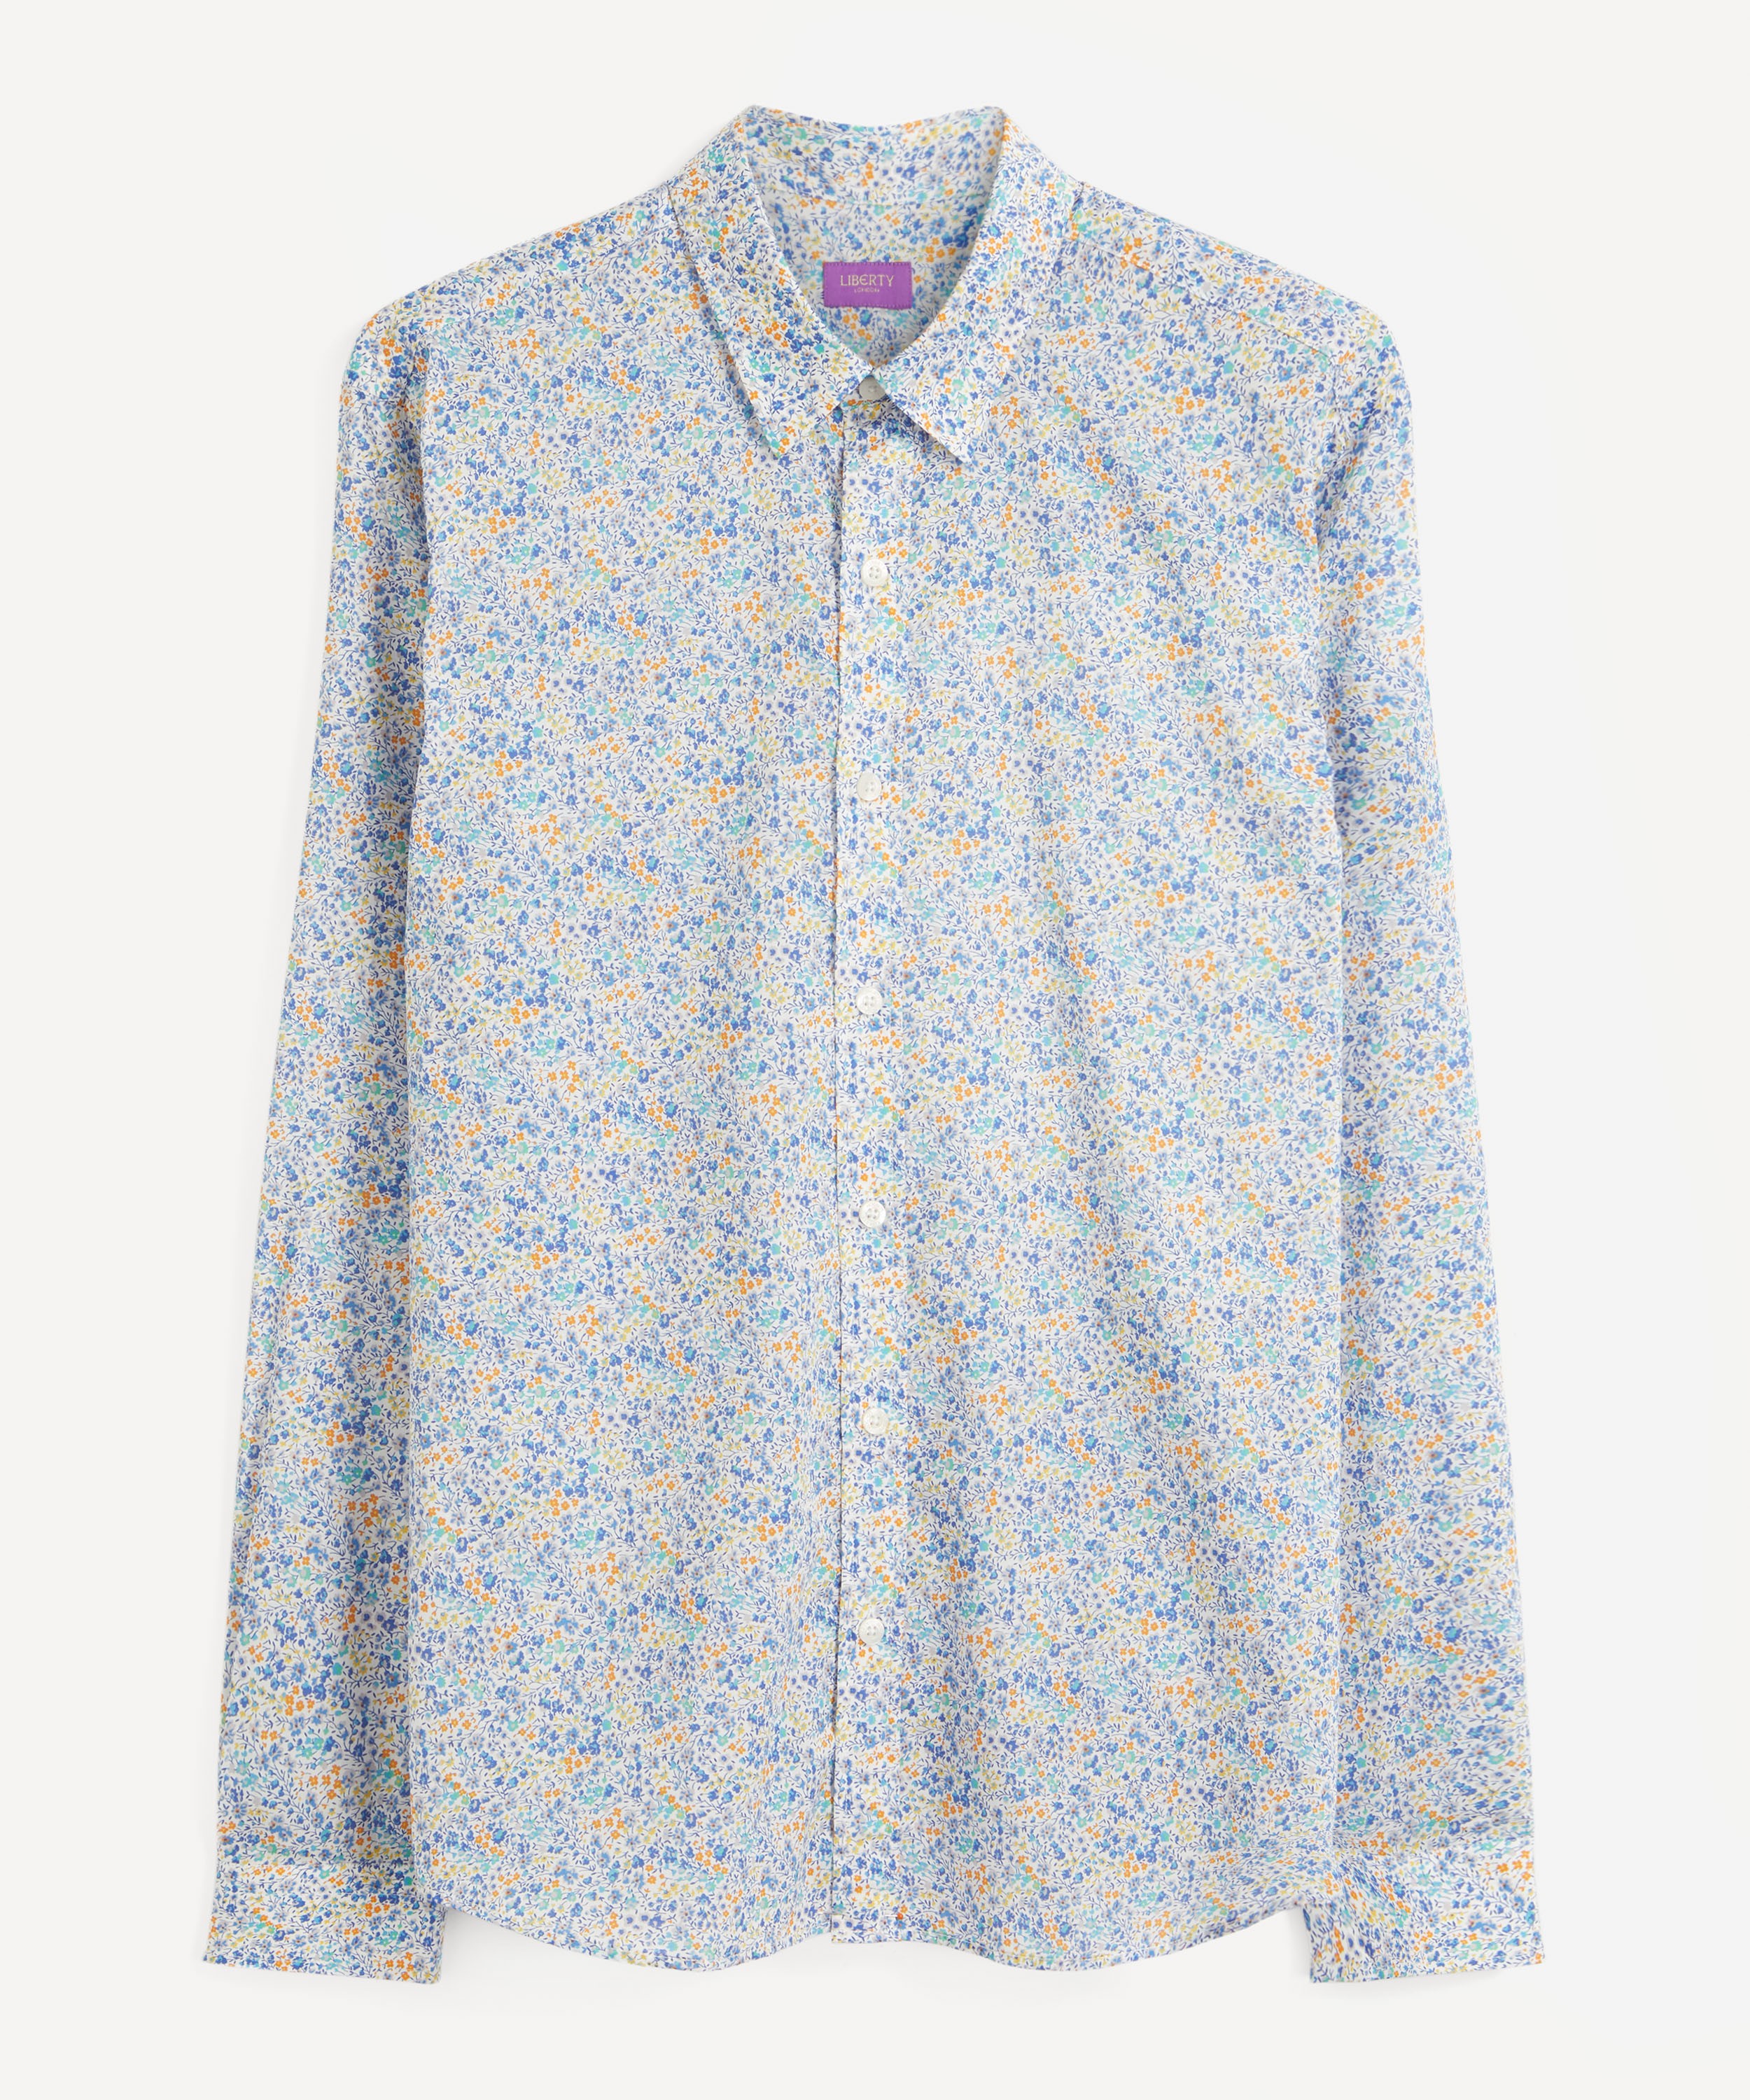 Liberty - Phoebe Lasenby Tana Lawn™ Cotton Casual Classic Shirt